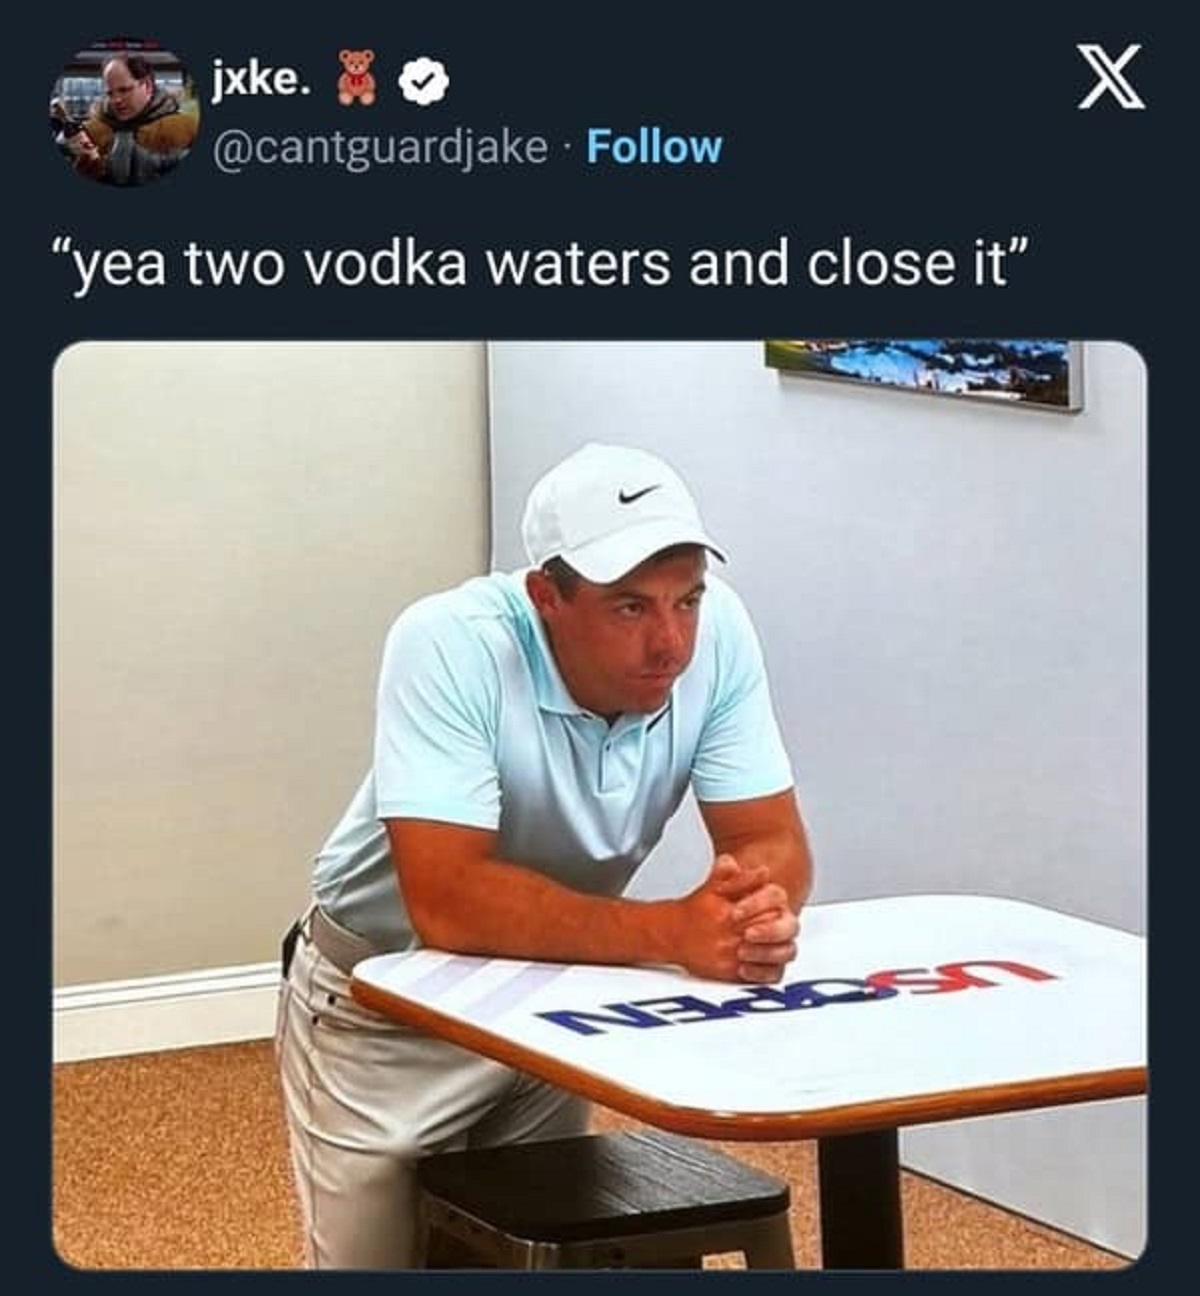 Golf - jxke. "yea two vodka waters and close it" X